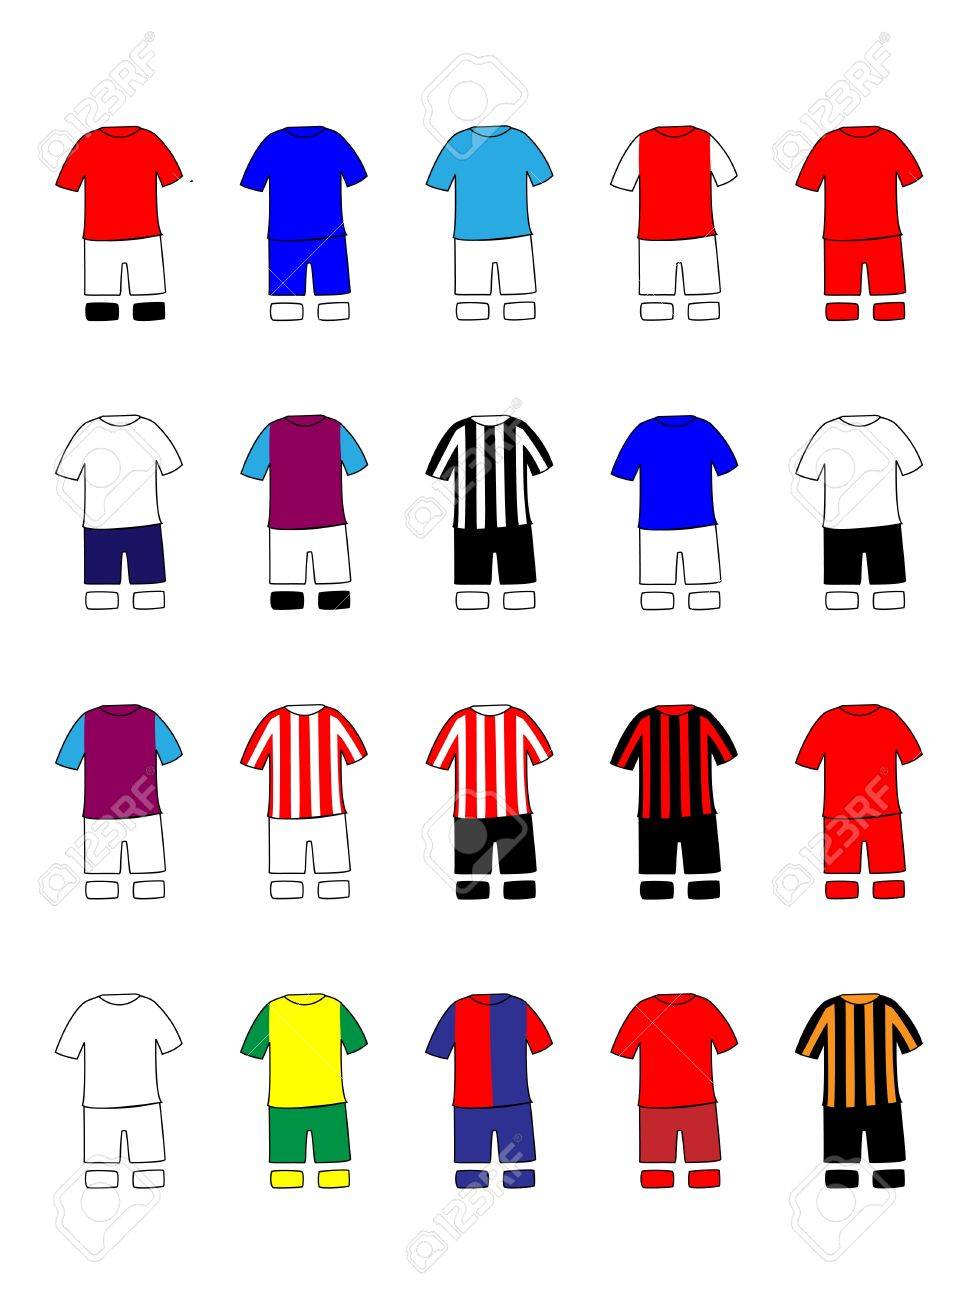 English League Clubs Kits 2013-14 Premier League Stok Fotoğraf - 21050157